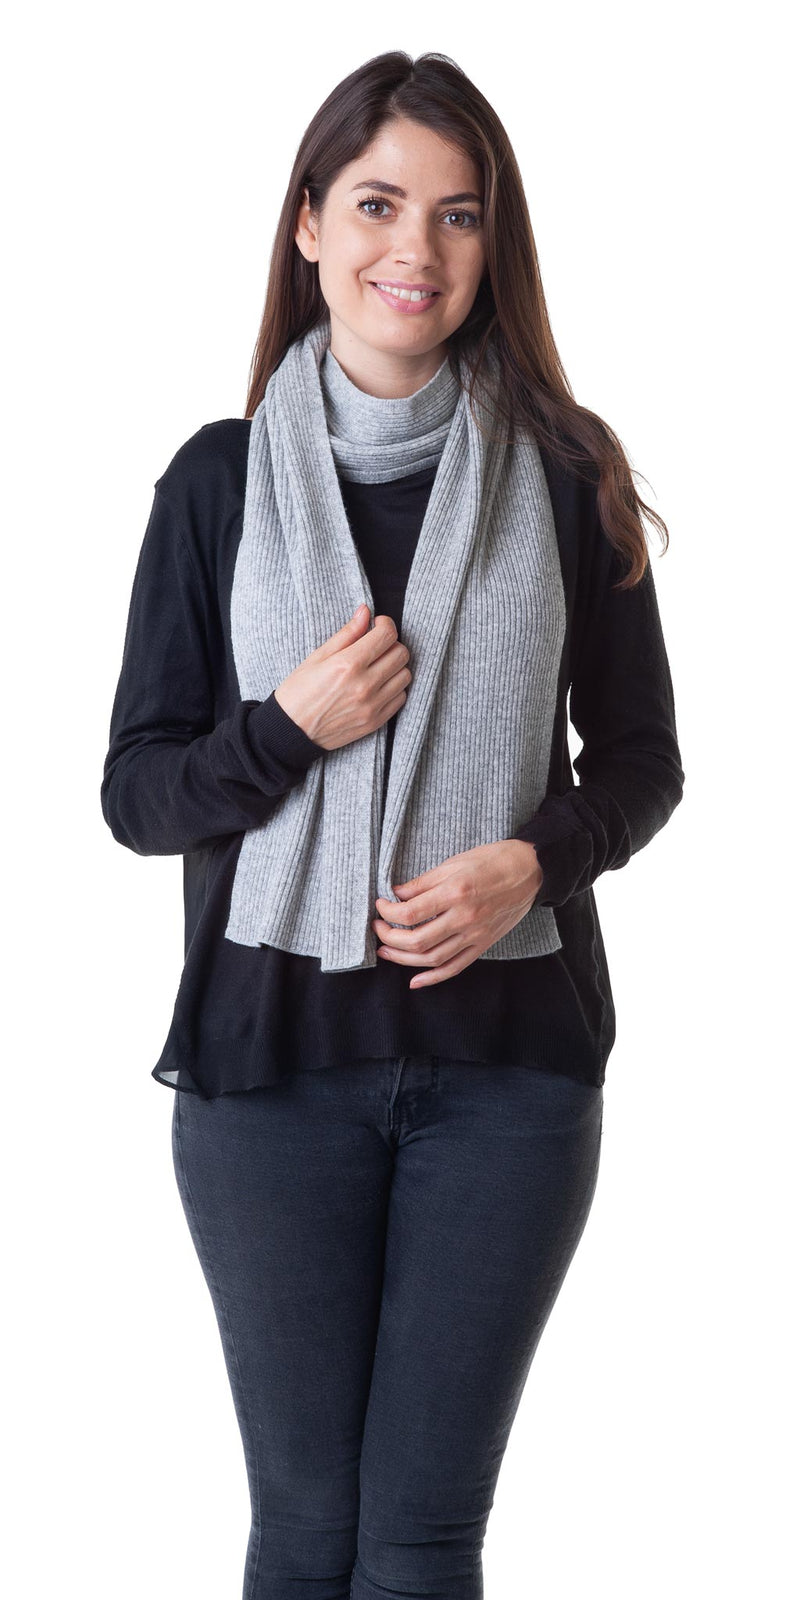 Cashmere Merino Scarf - Rib Knit - Soft Warm Stylish Winter Scarf for Women & Men - Flannel Grey